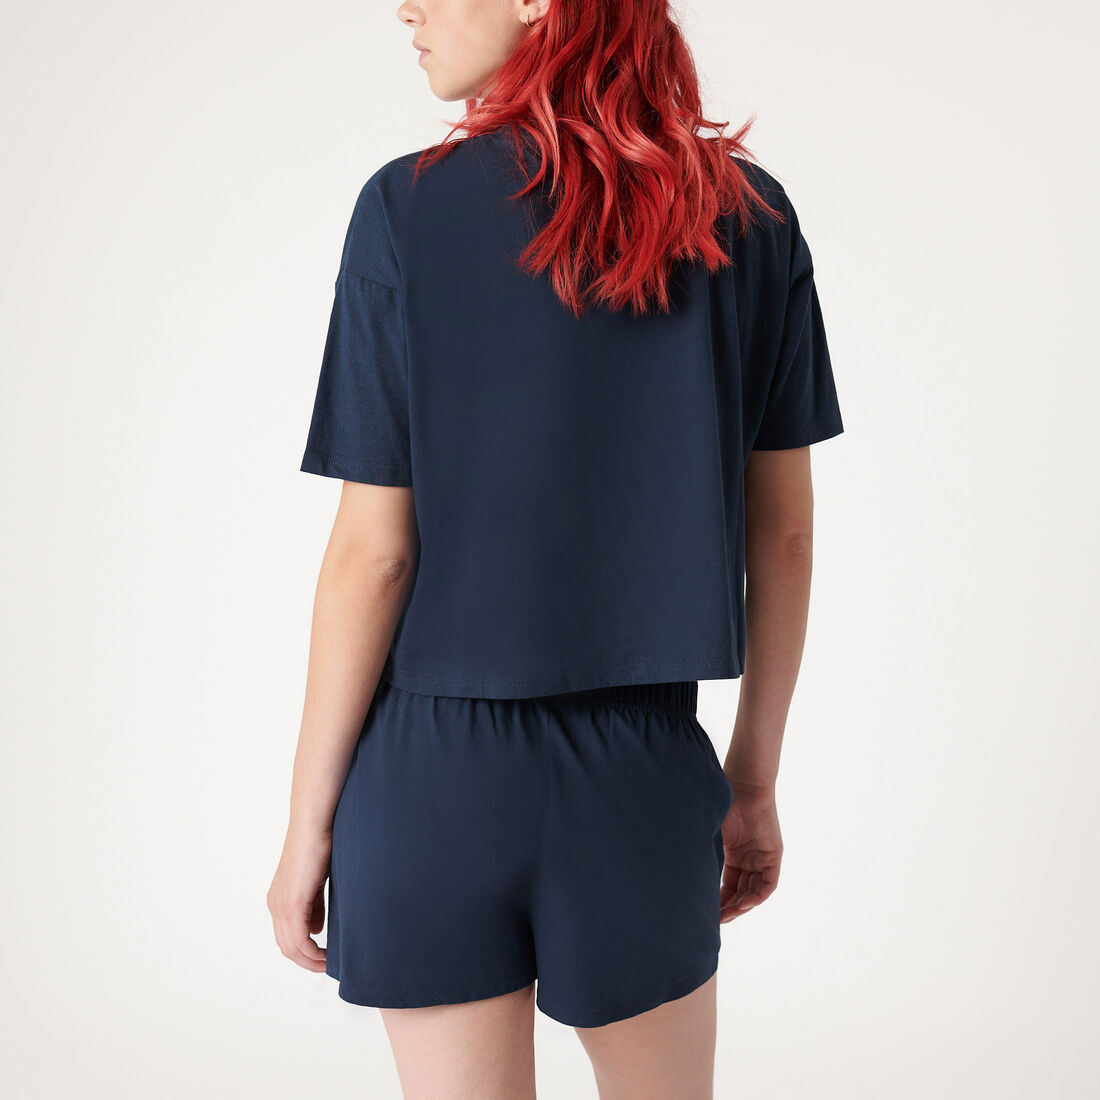 Stitch print shorts;